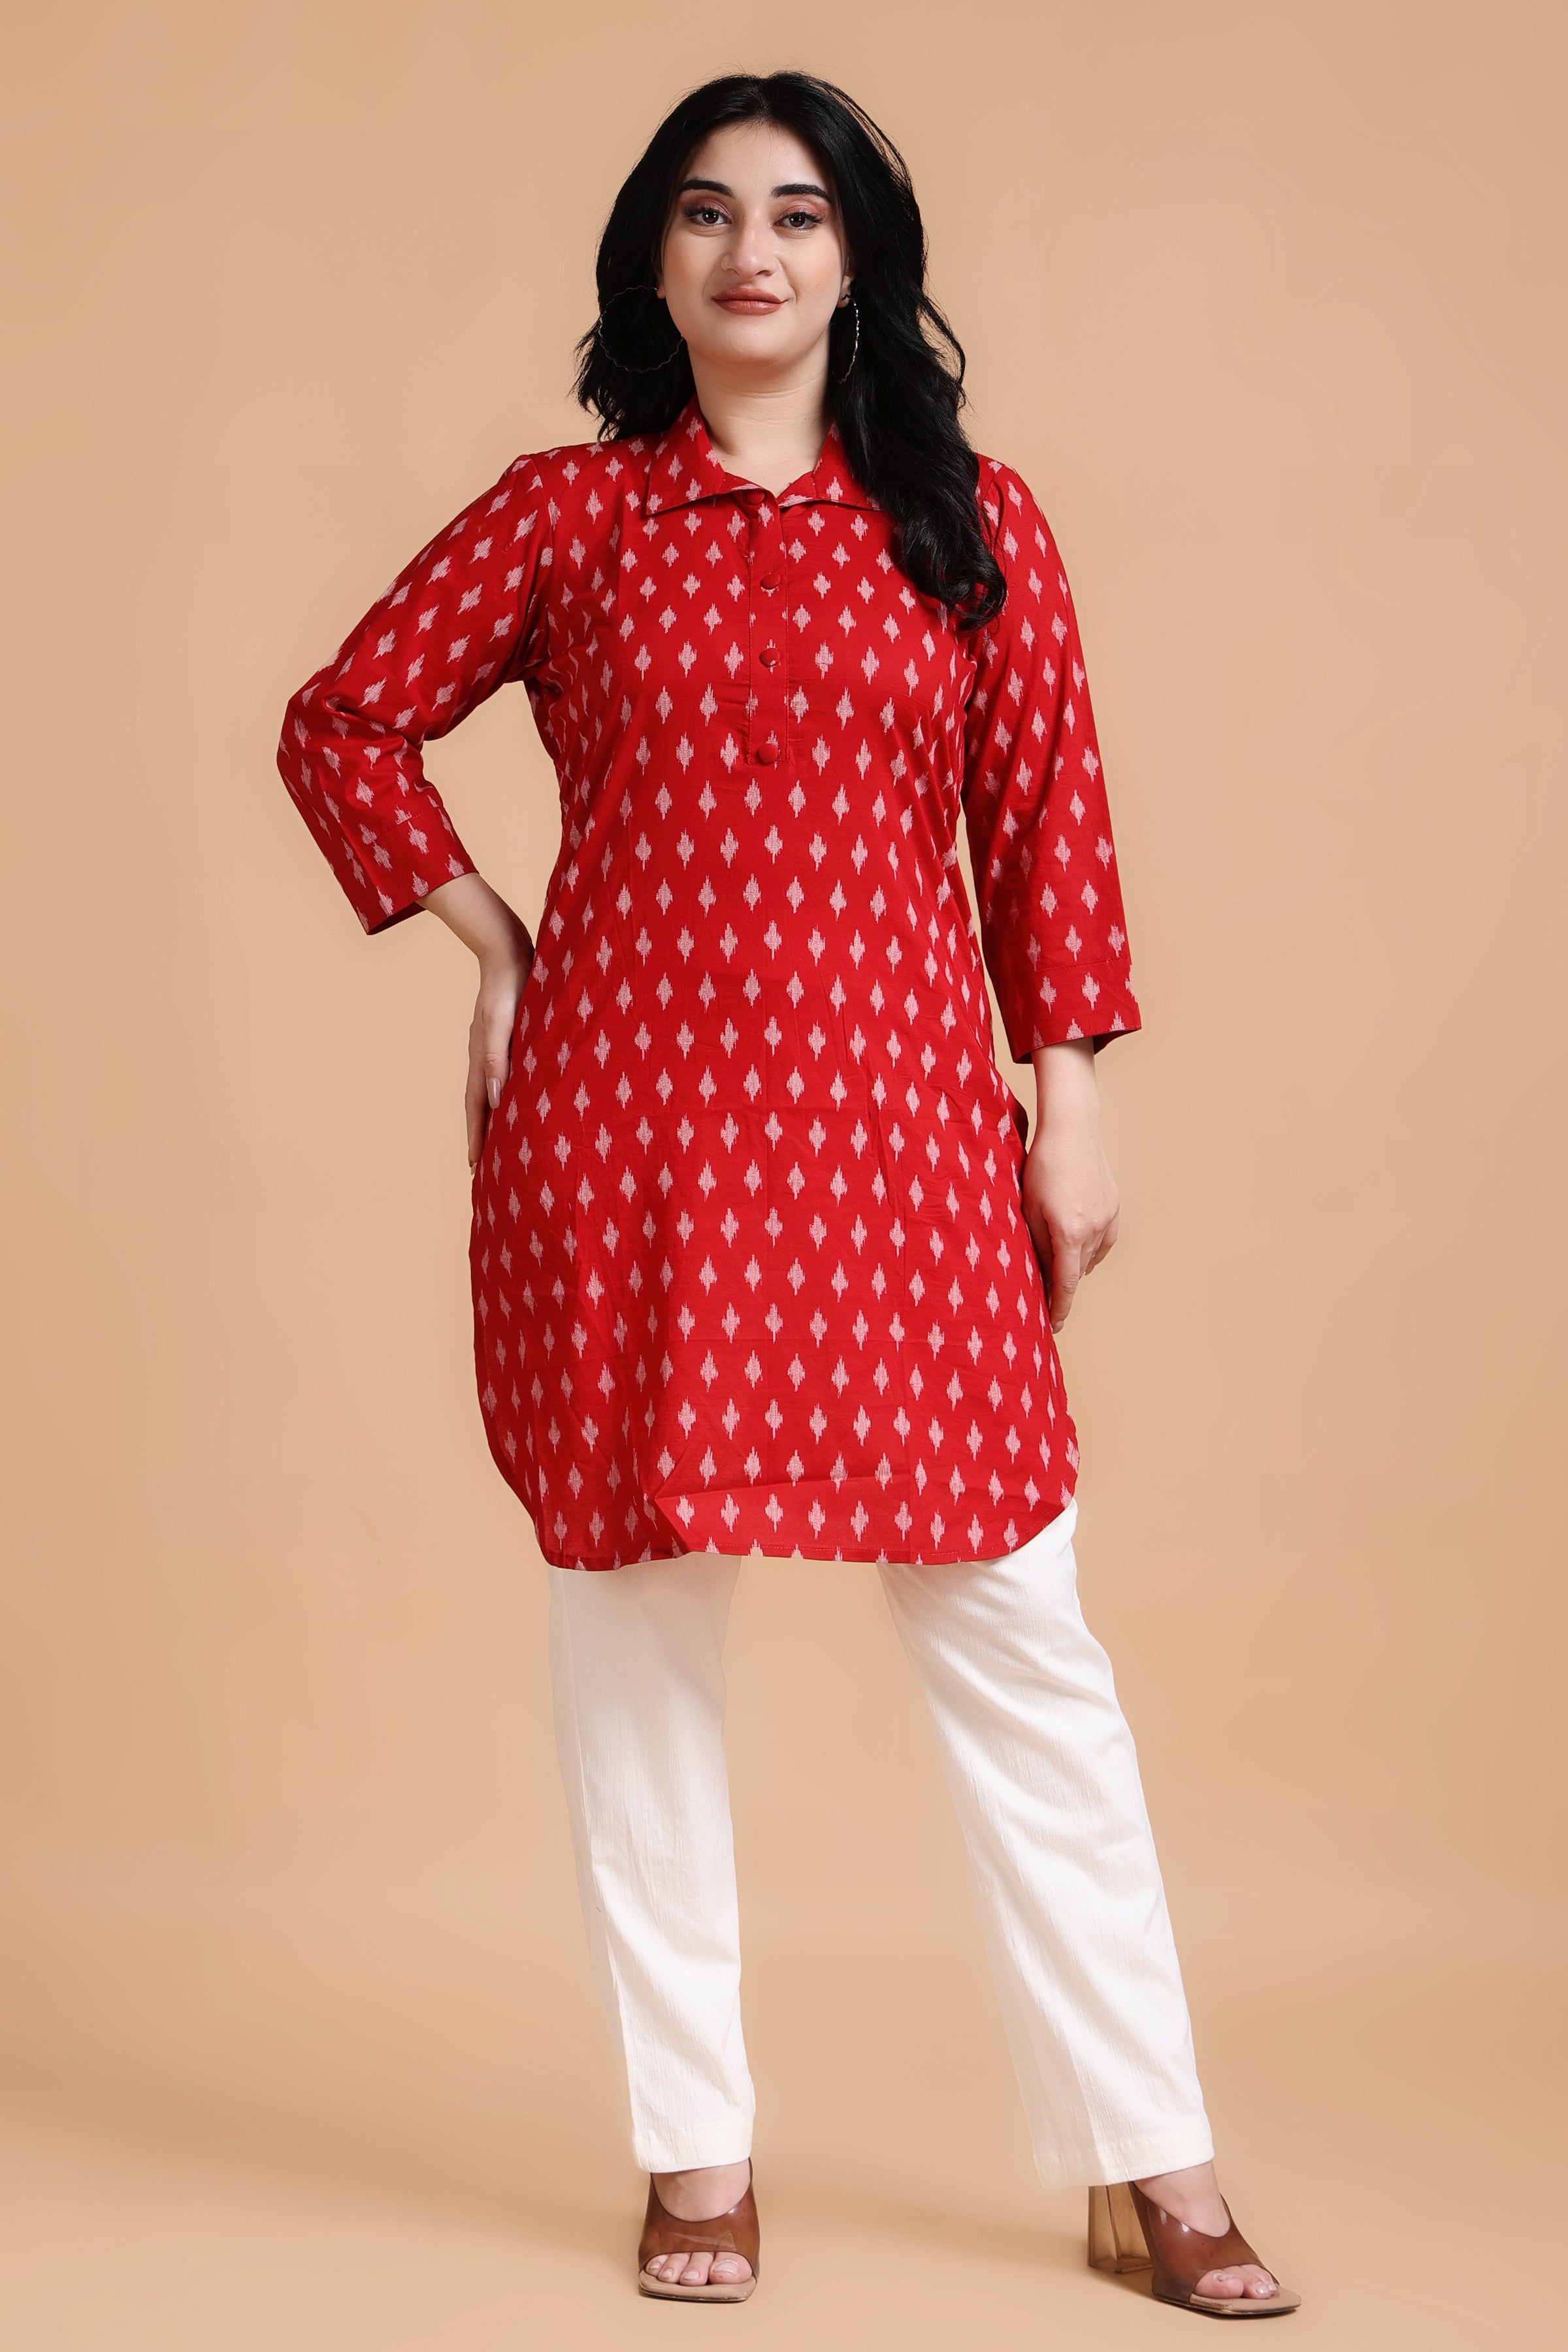 Buy Hakimi Clothing SC Women's Desi Desirable White Chiken Casual Short  Kurti Top at Amazon.in